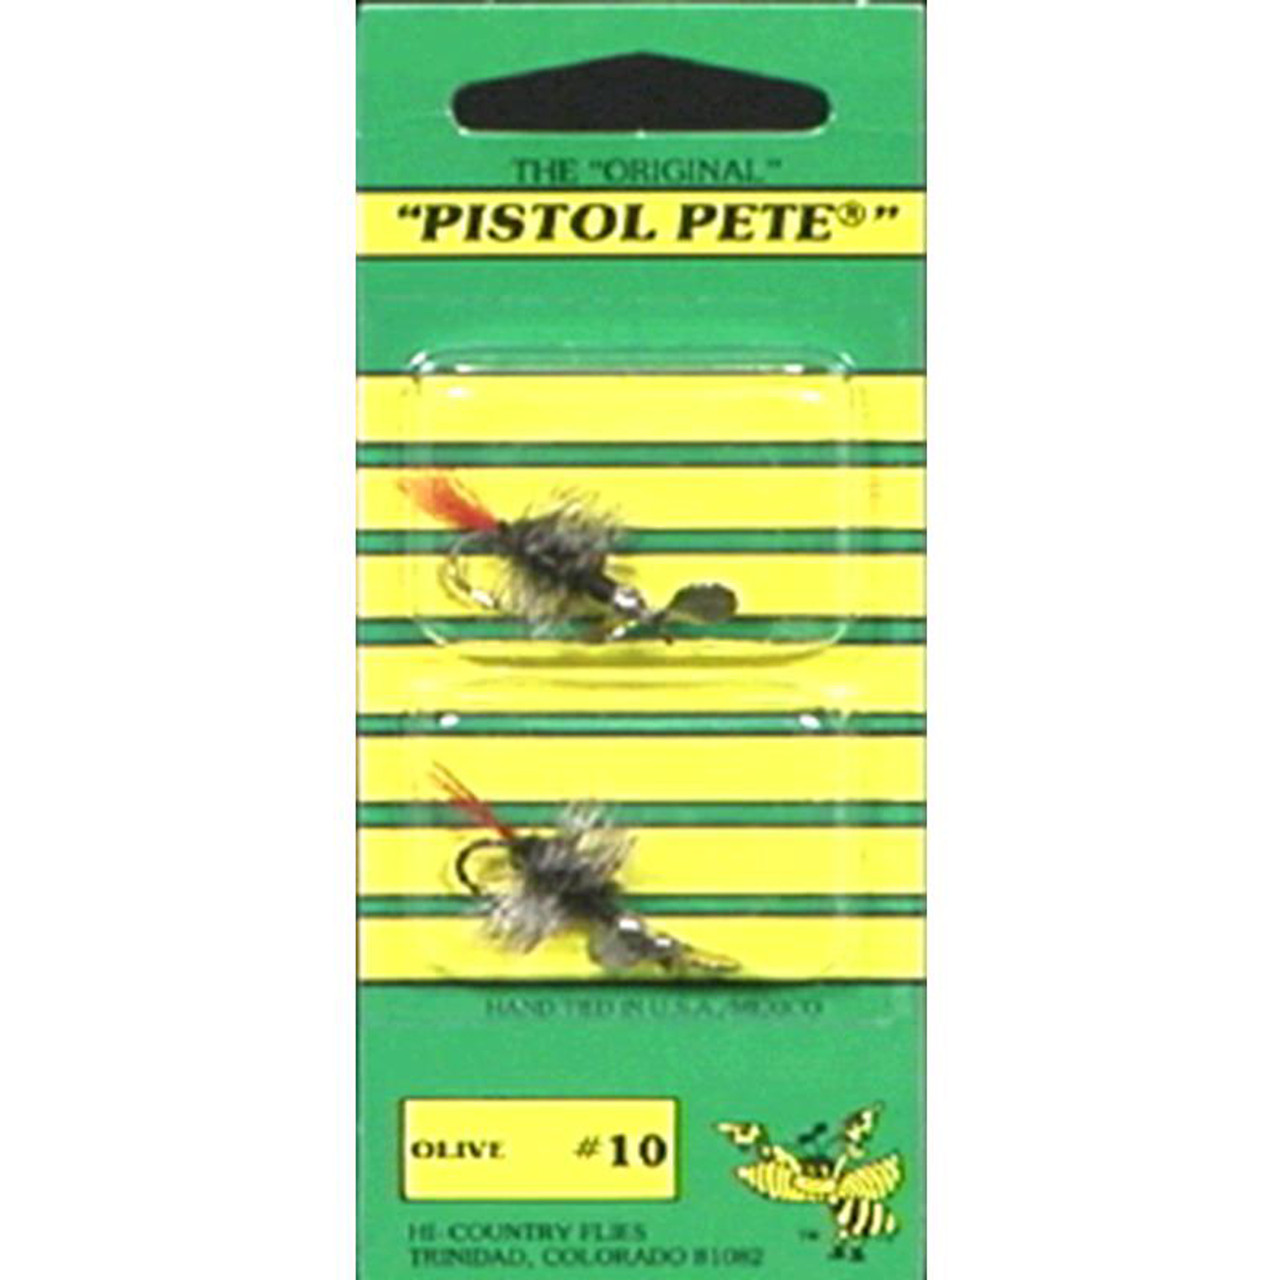 Pistol Pete - Hi-Country Flies Pistol Pete Size 10 - Olive